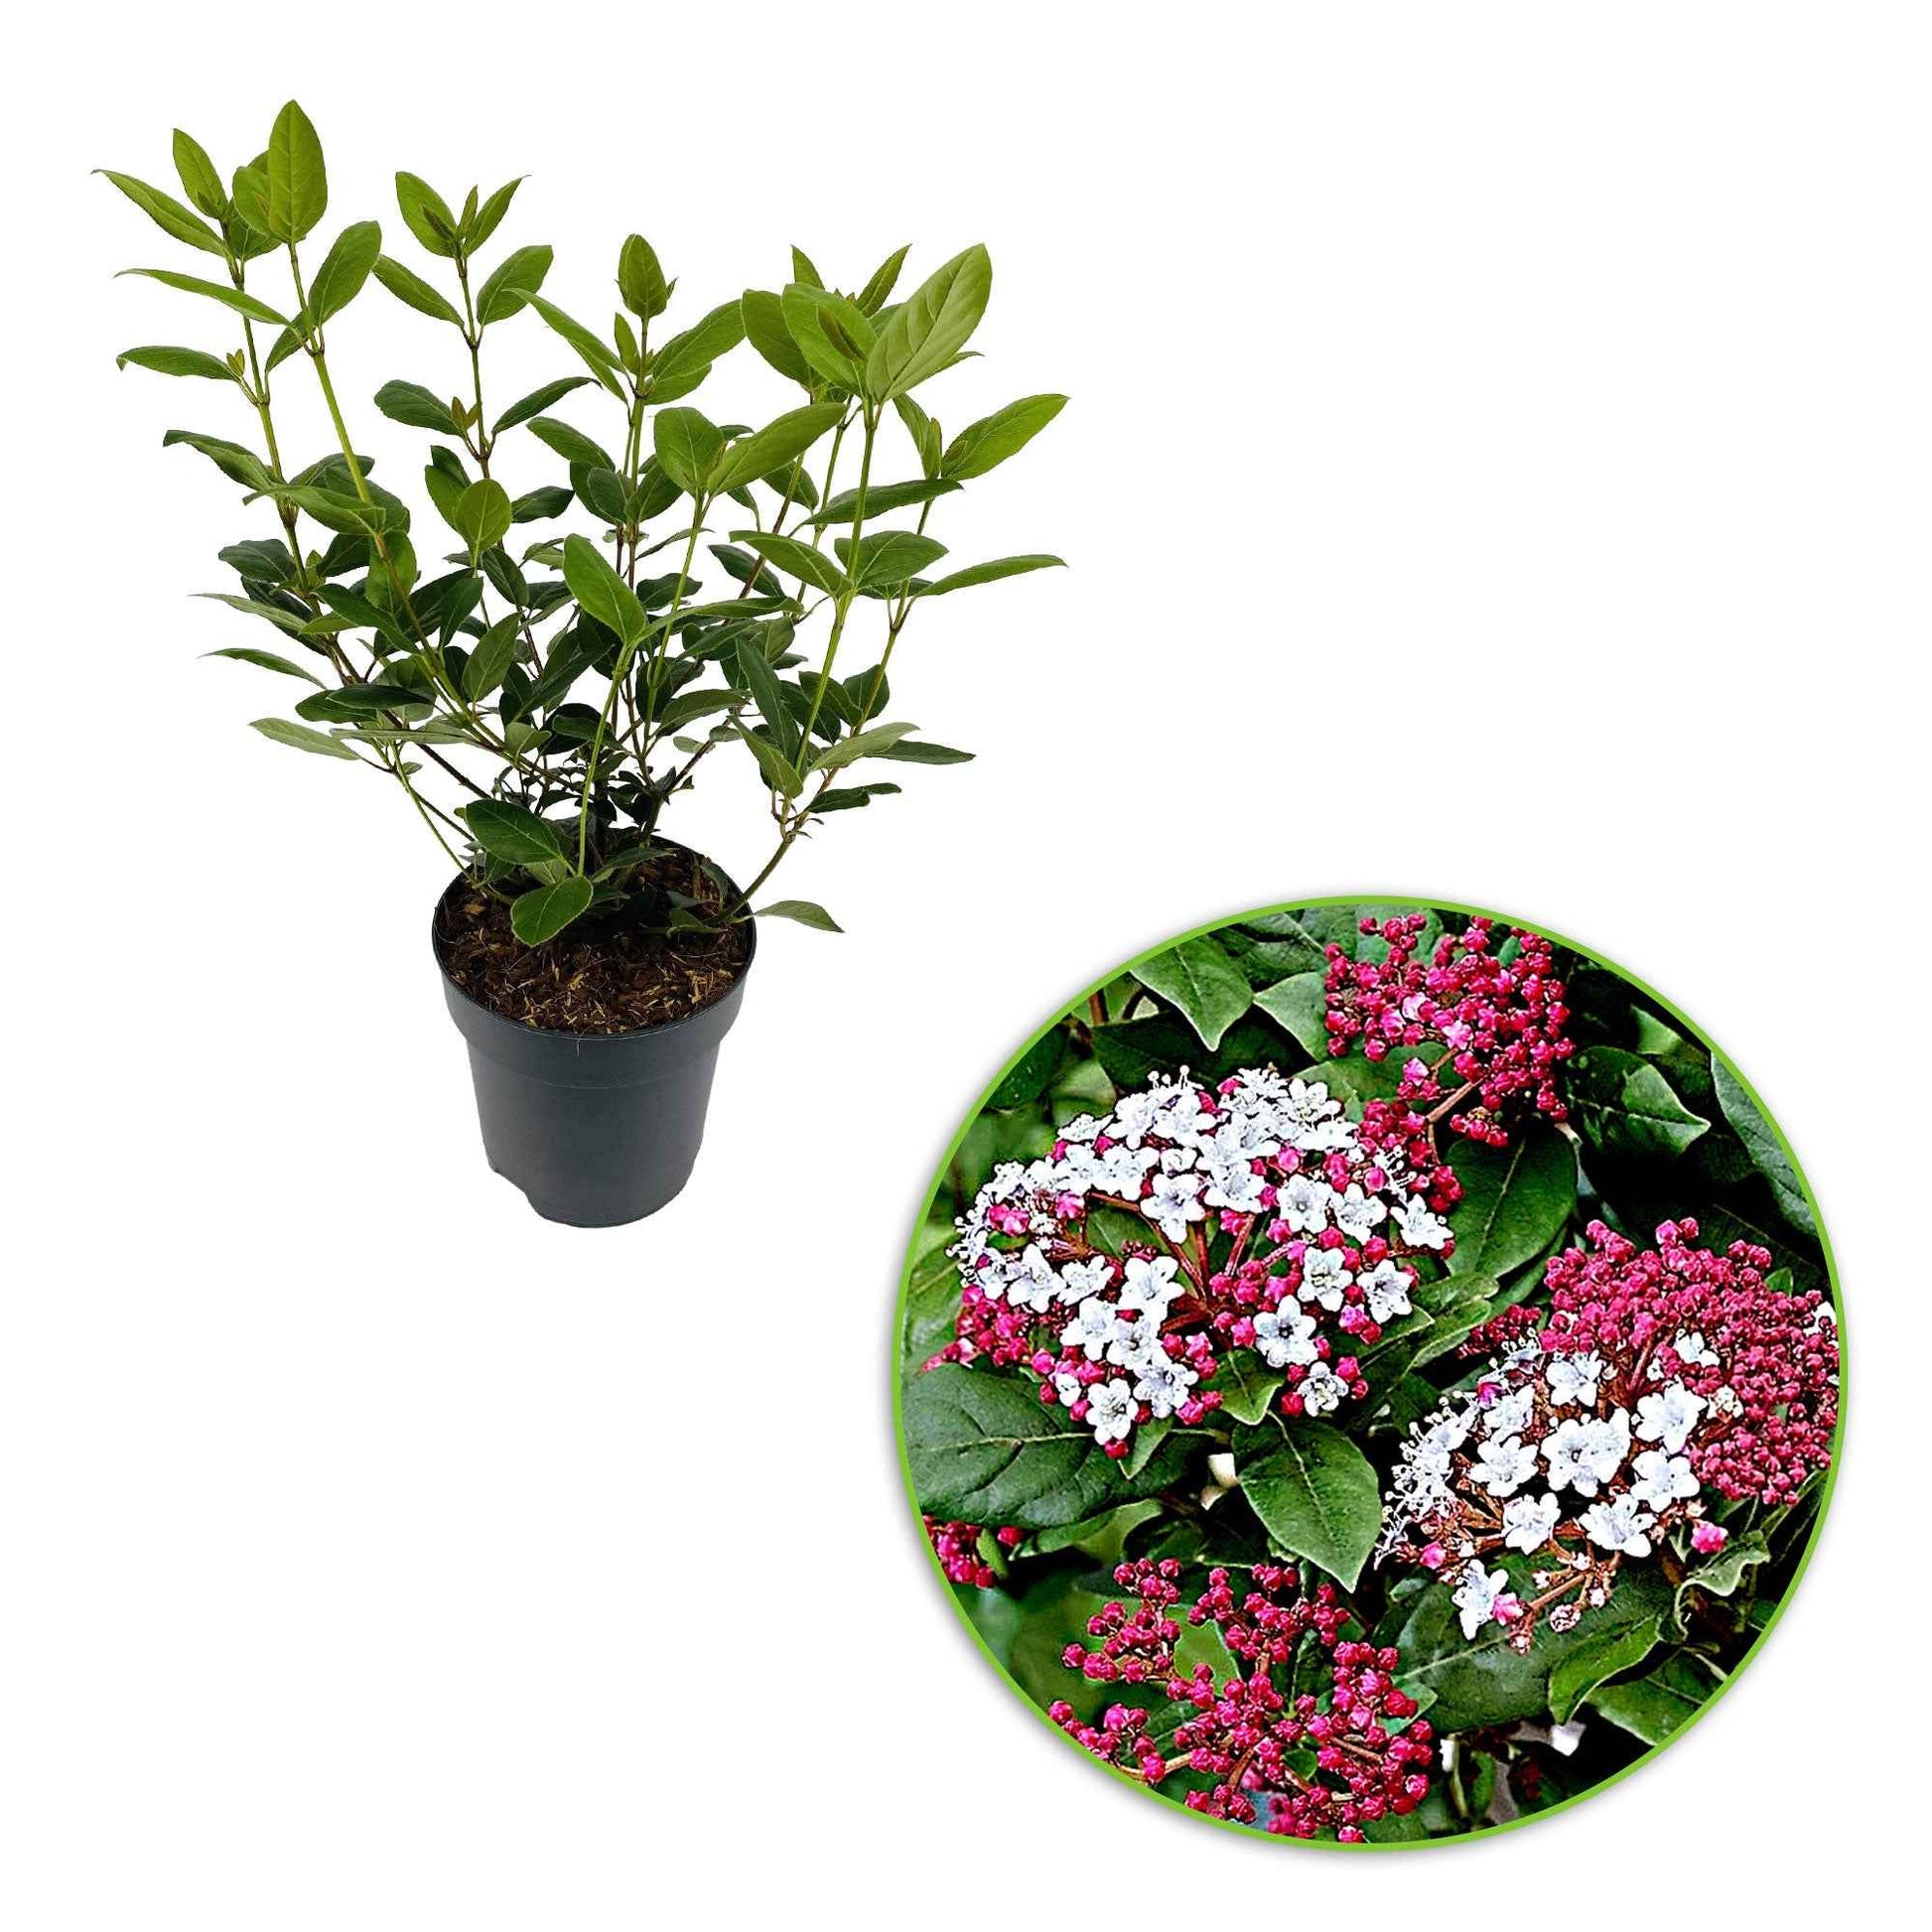 Sneeuwbal 'Gwenllian' - Viburnum tinus gwenllian - Heesters en vaste planten